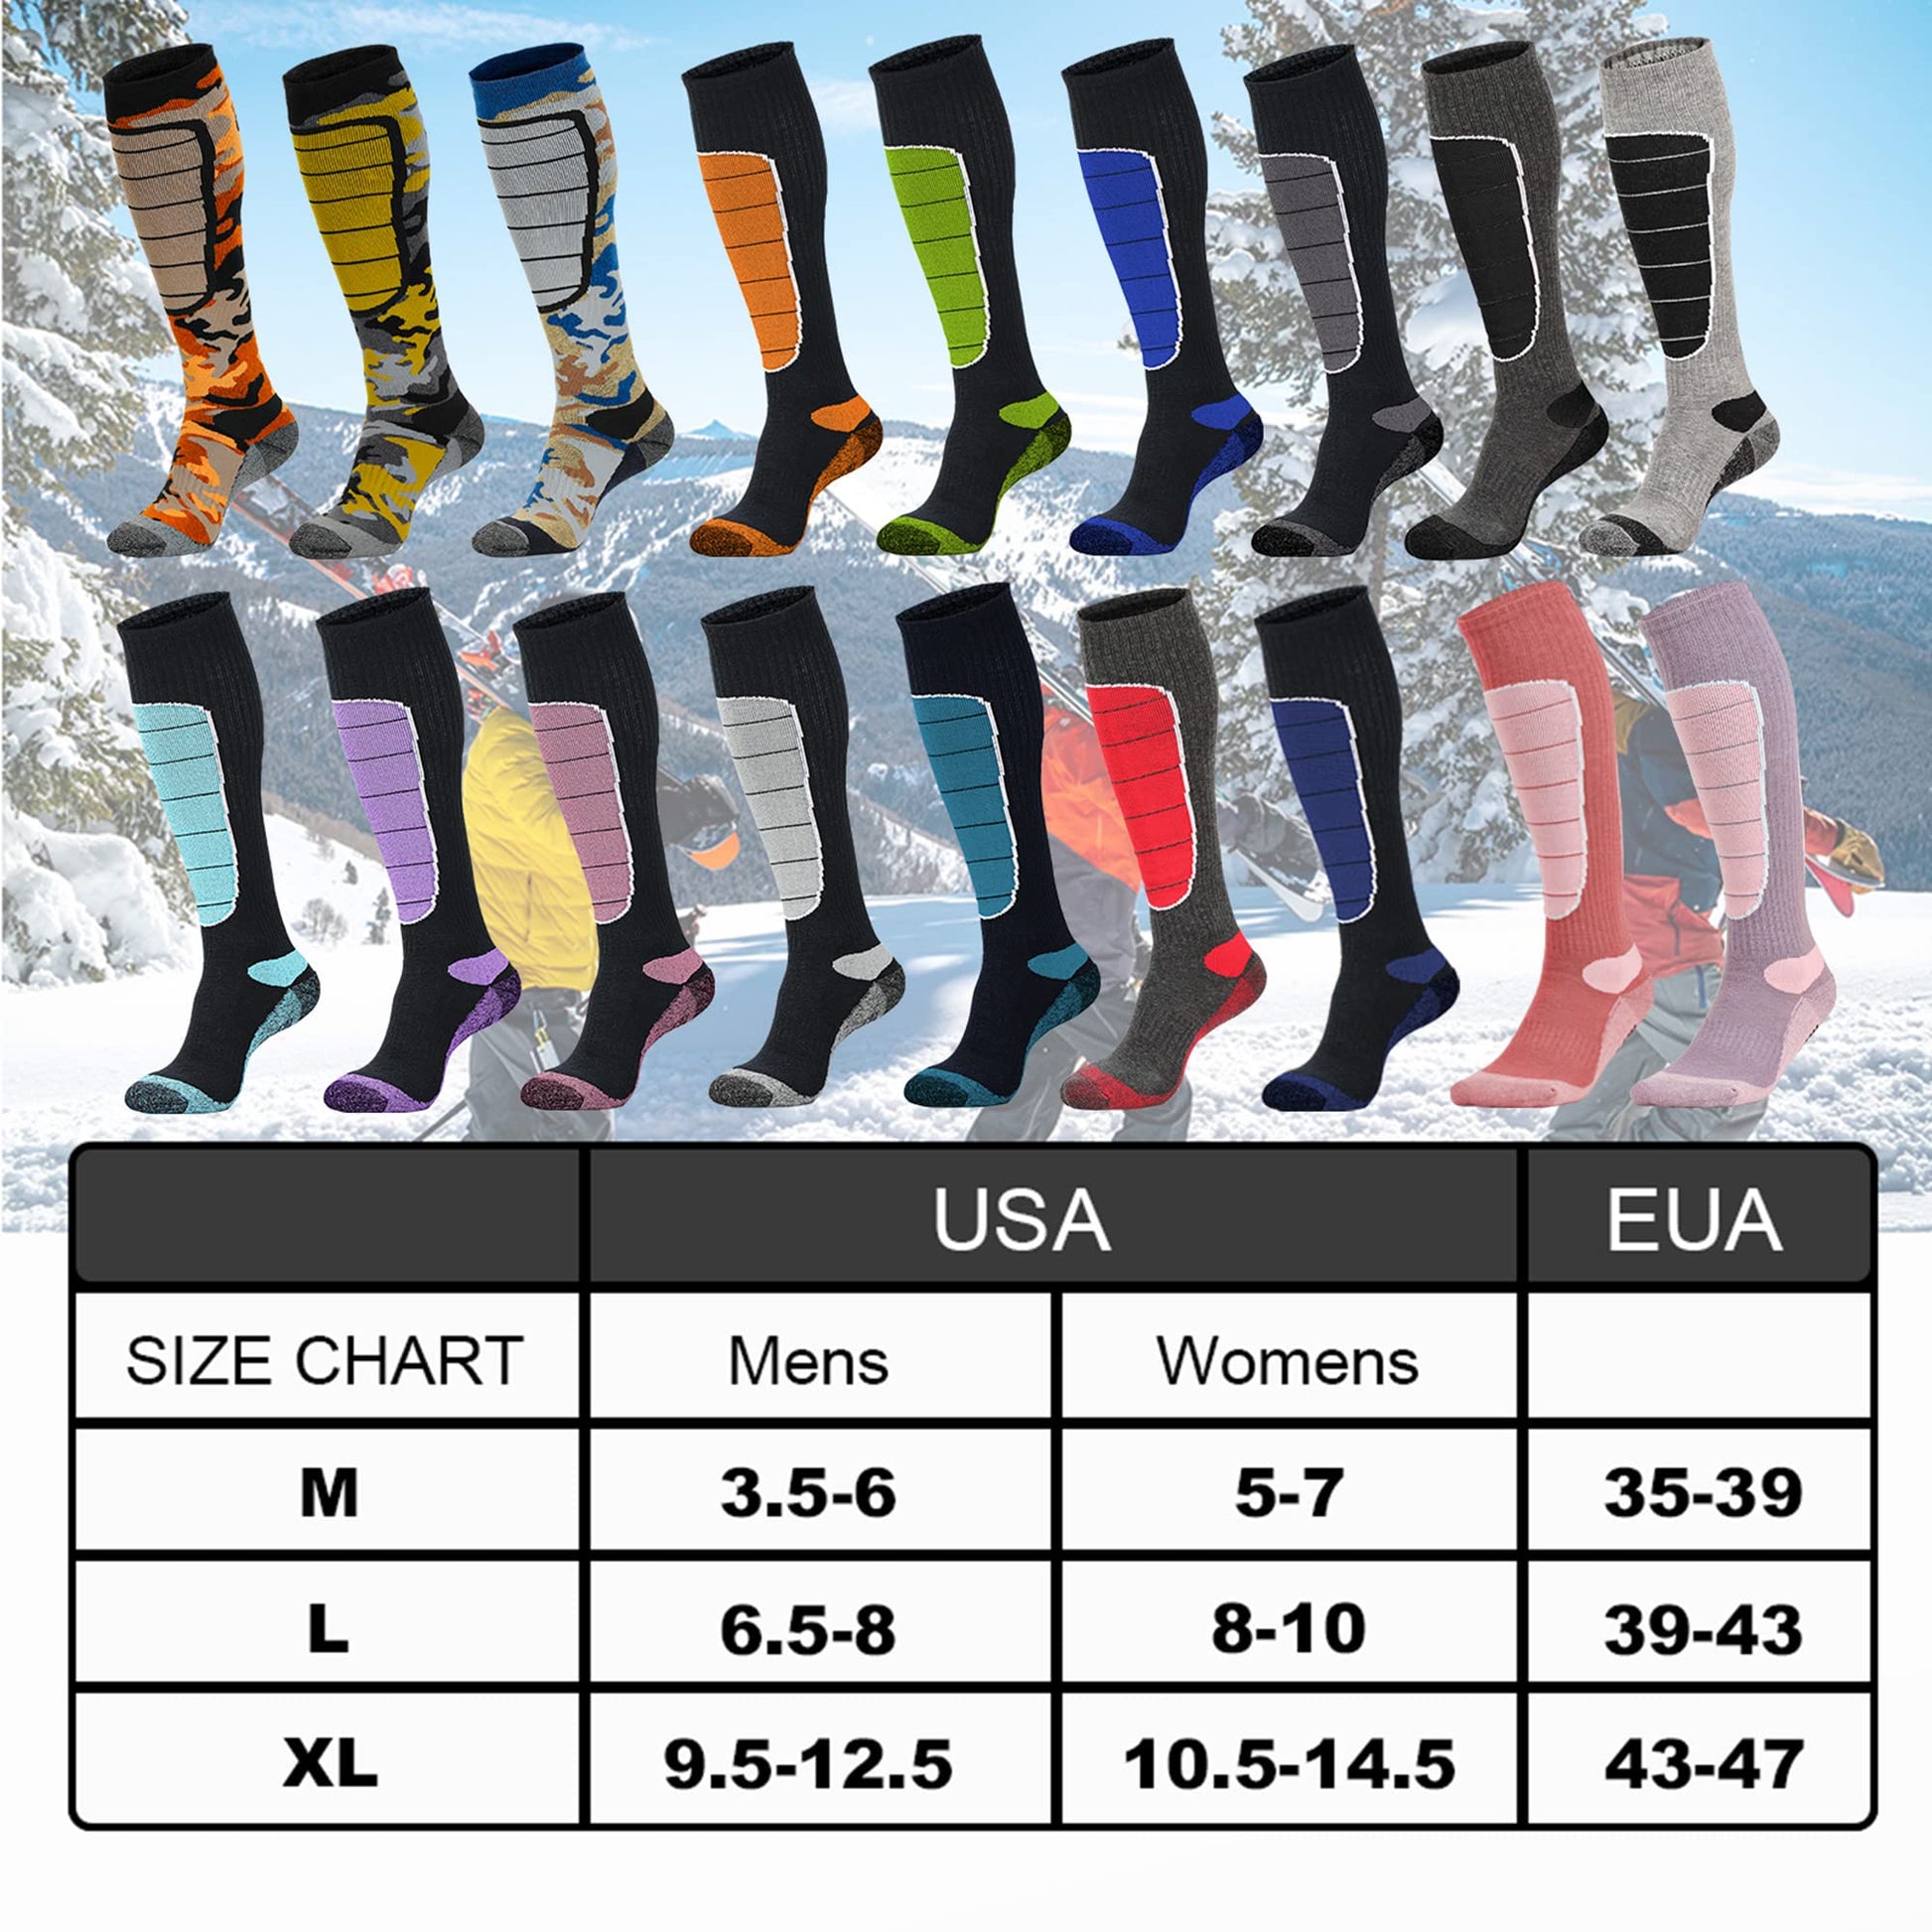 Merino Wool Ski Socks, Cold Weather Socks for Snowboarding, Snow